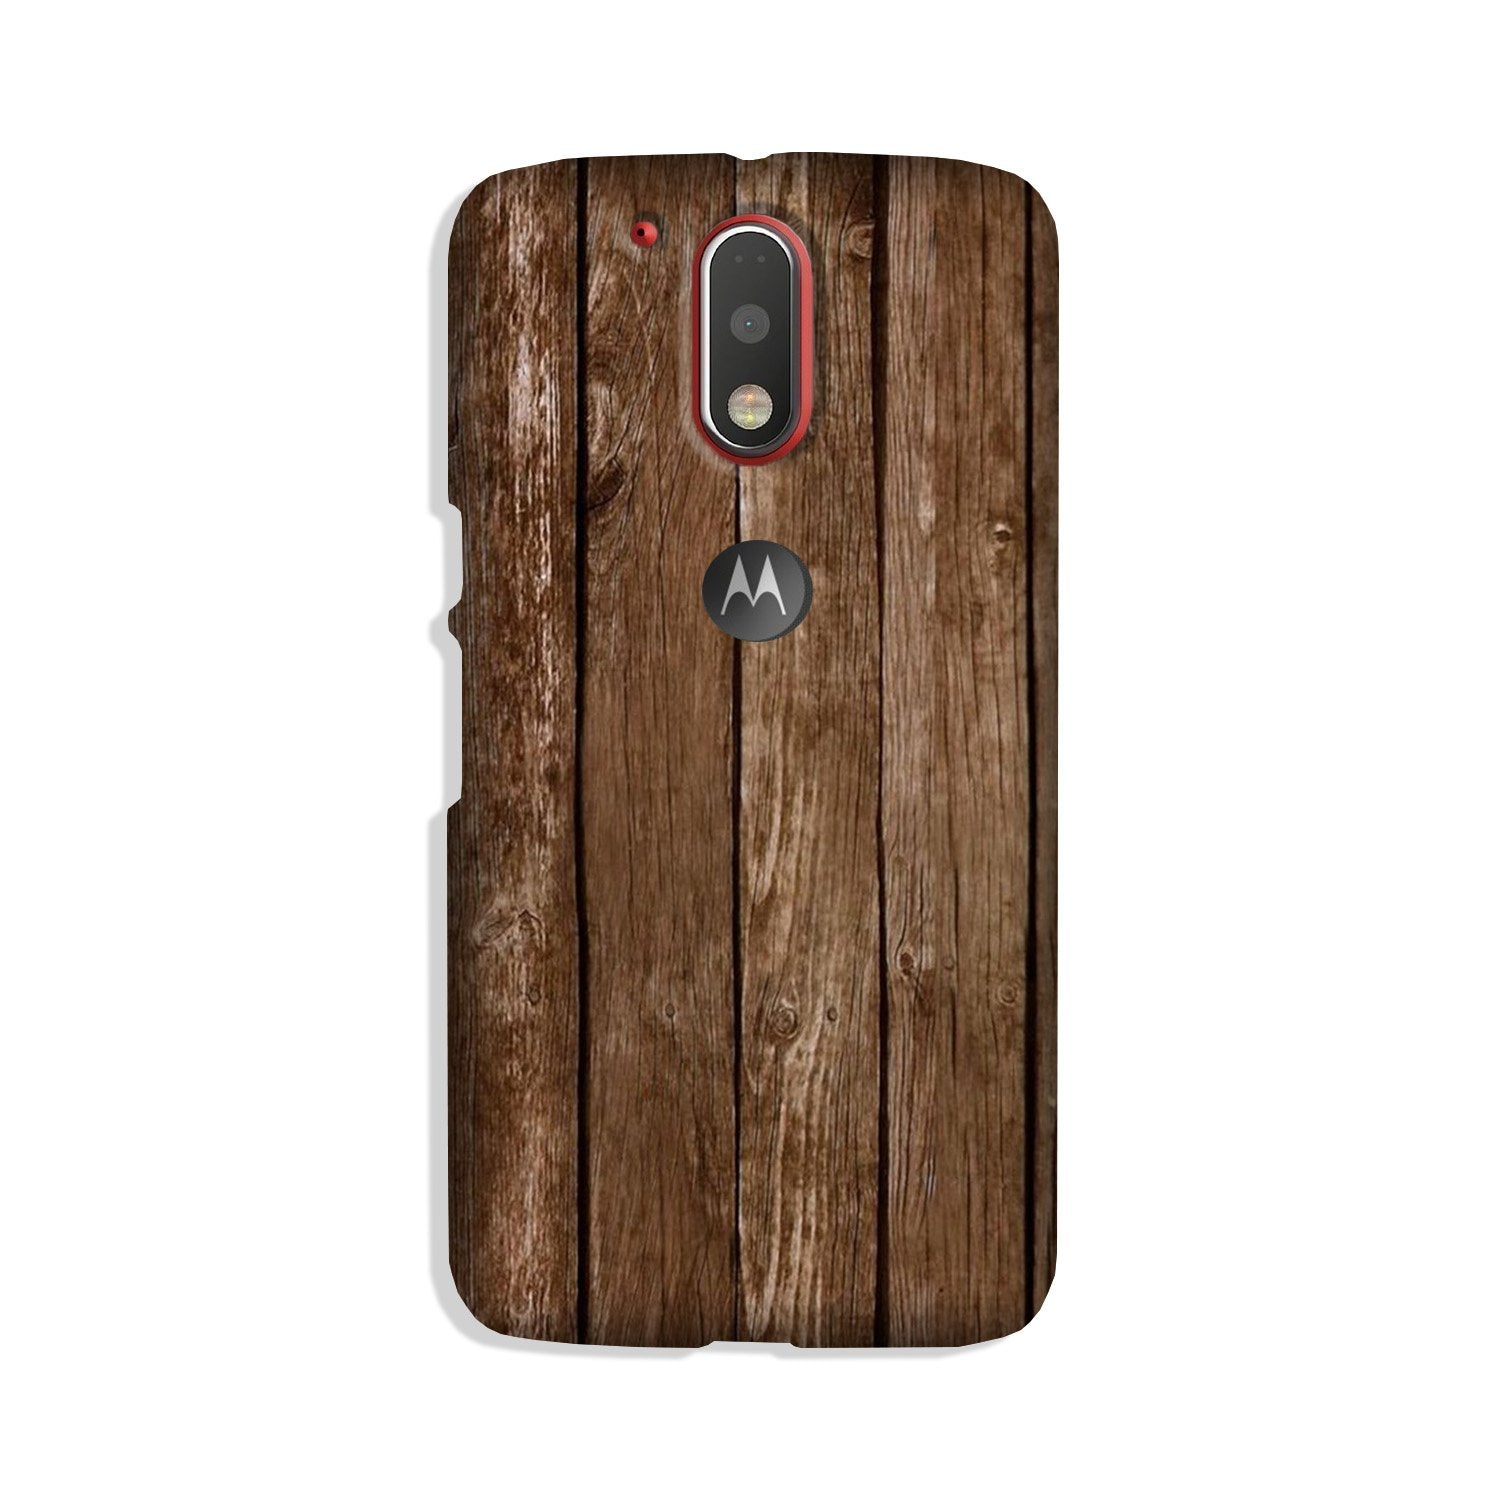 Wooden Look Case for Moto G4 Plus  (Design - 112)